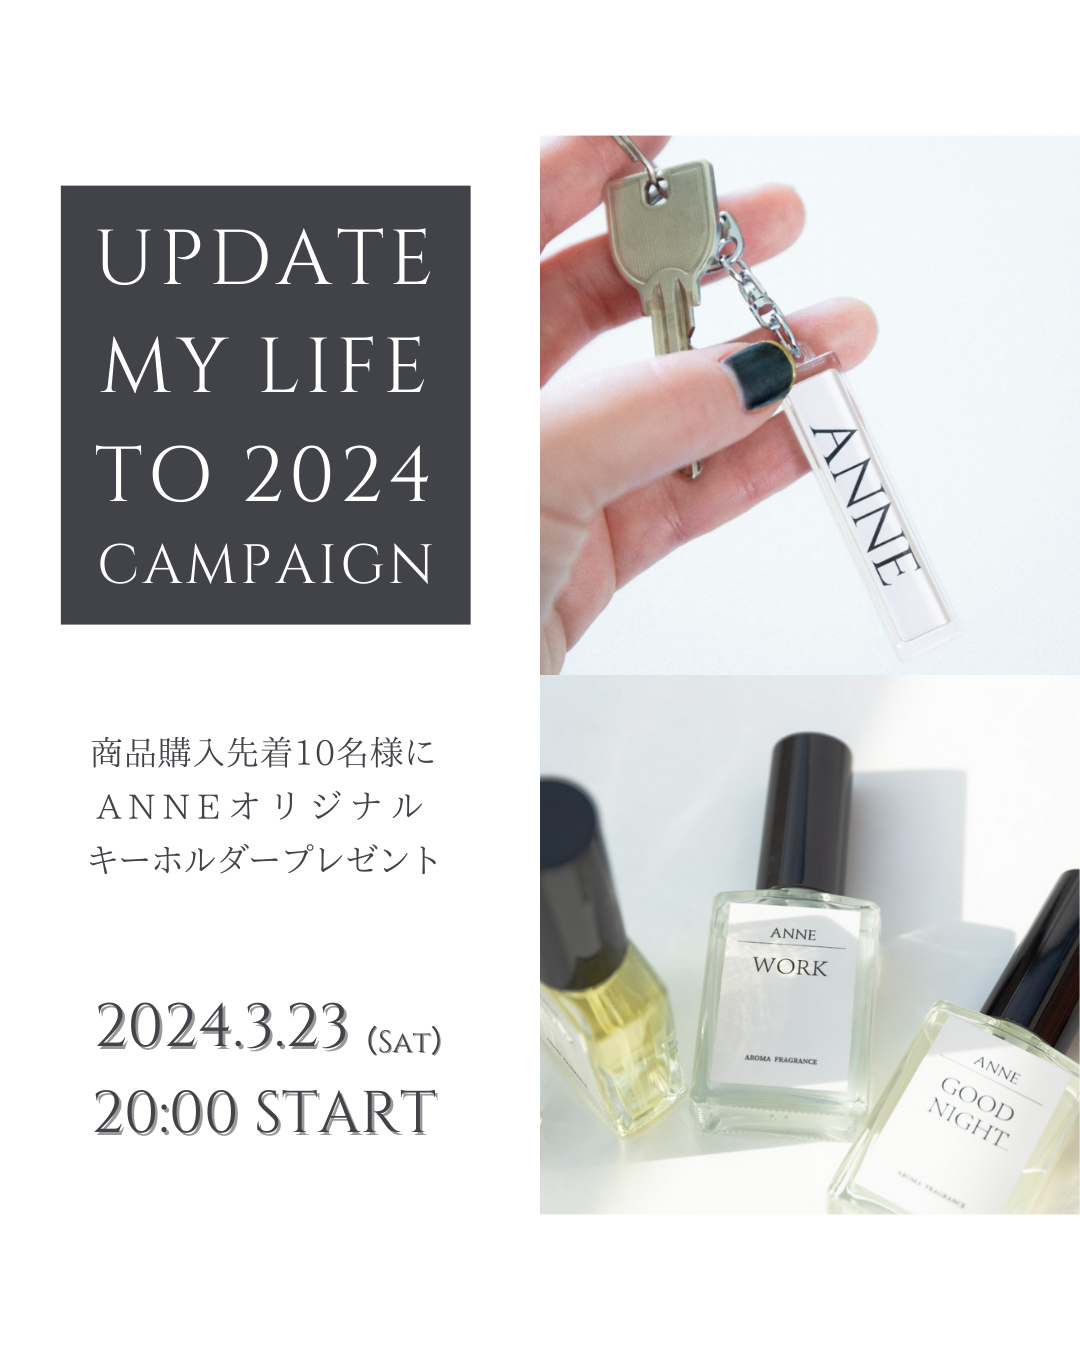 「UPDATE MY LIFE TO 2024 キャンペーン」のお知らせ